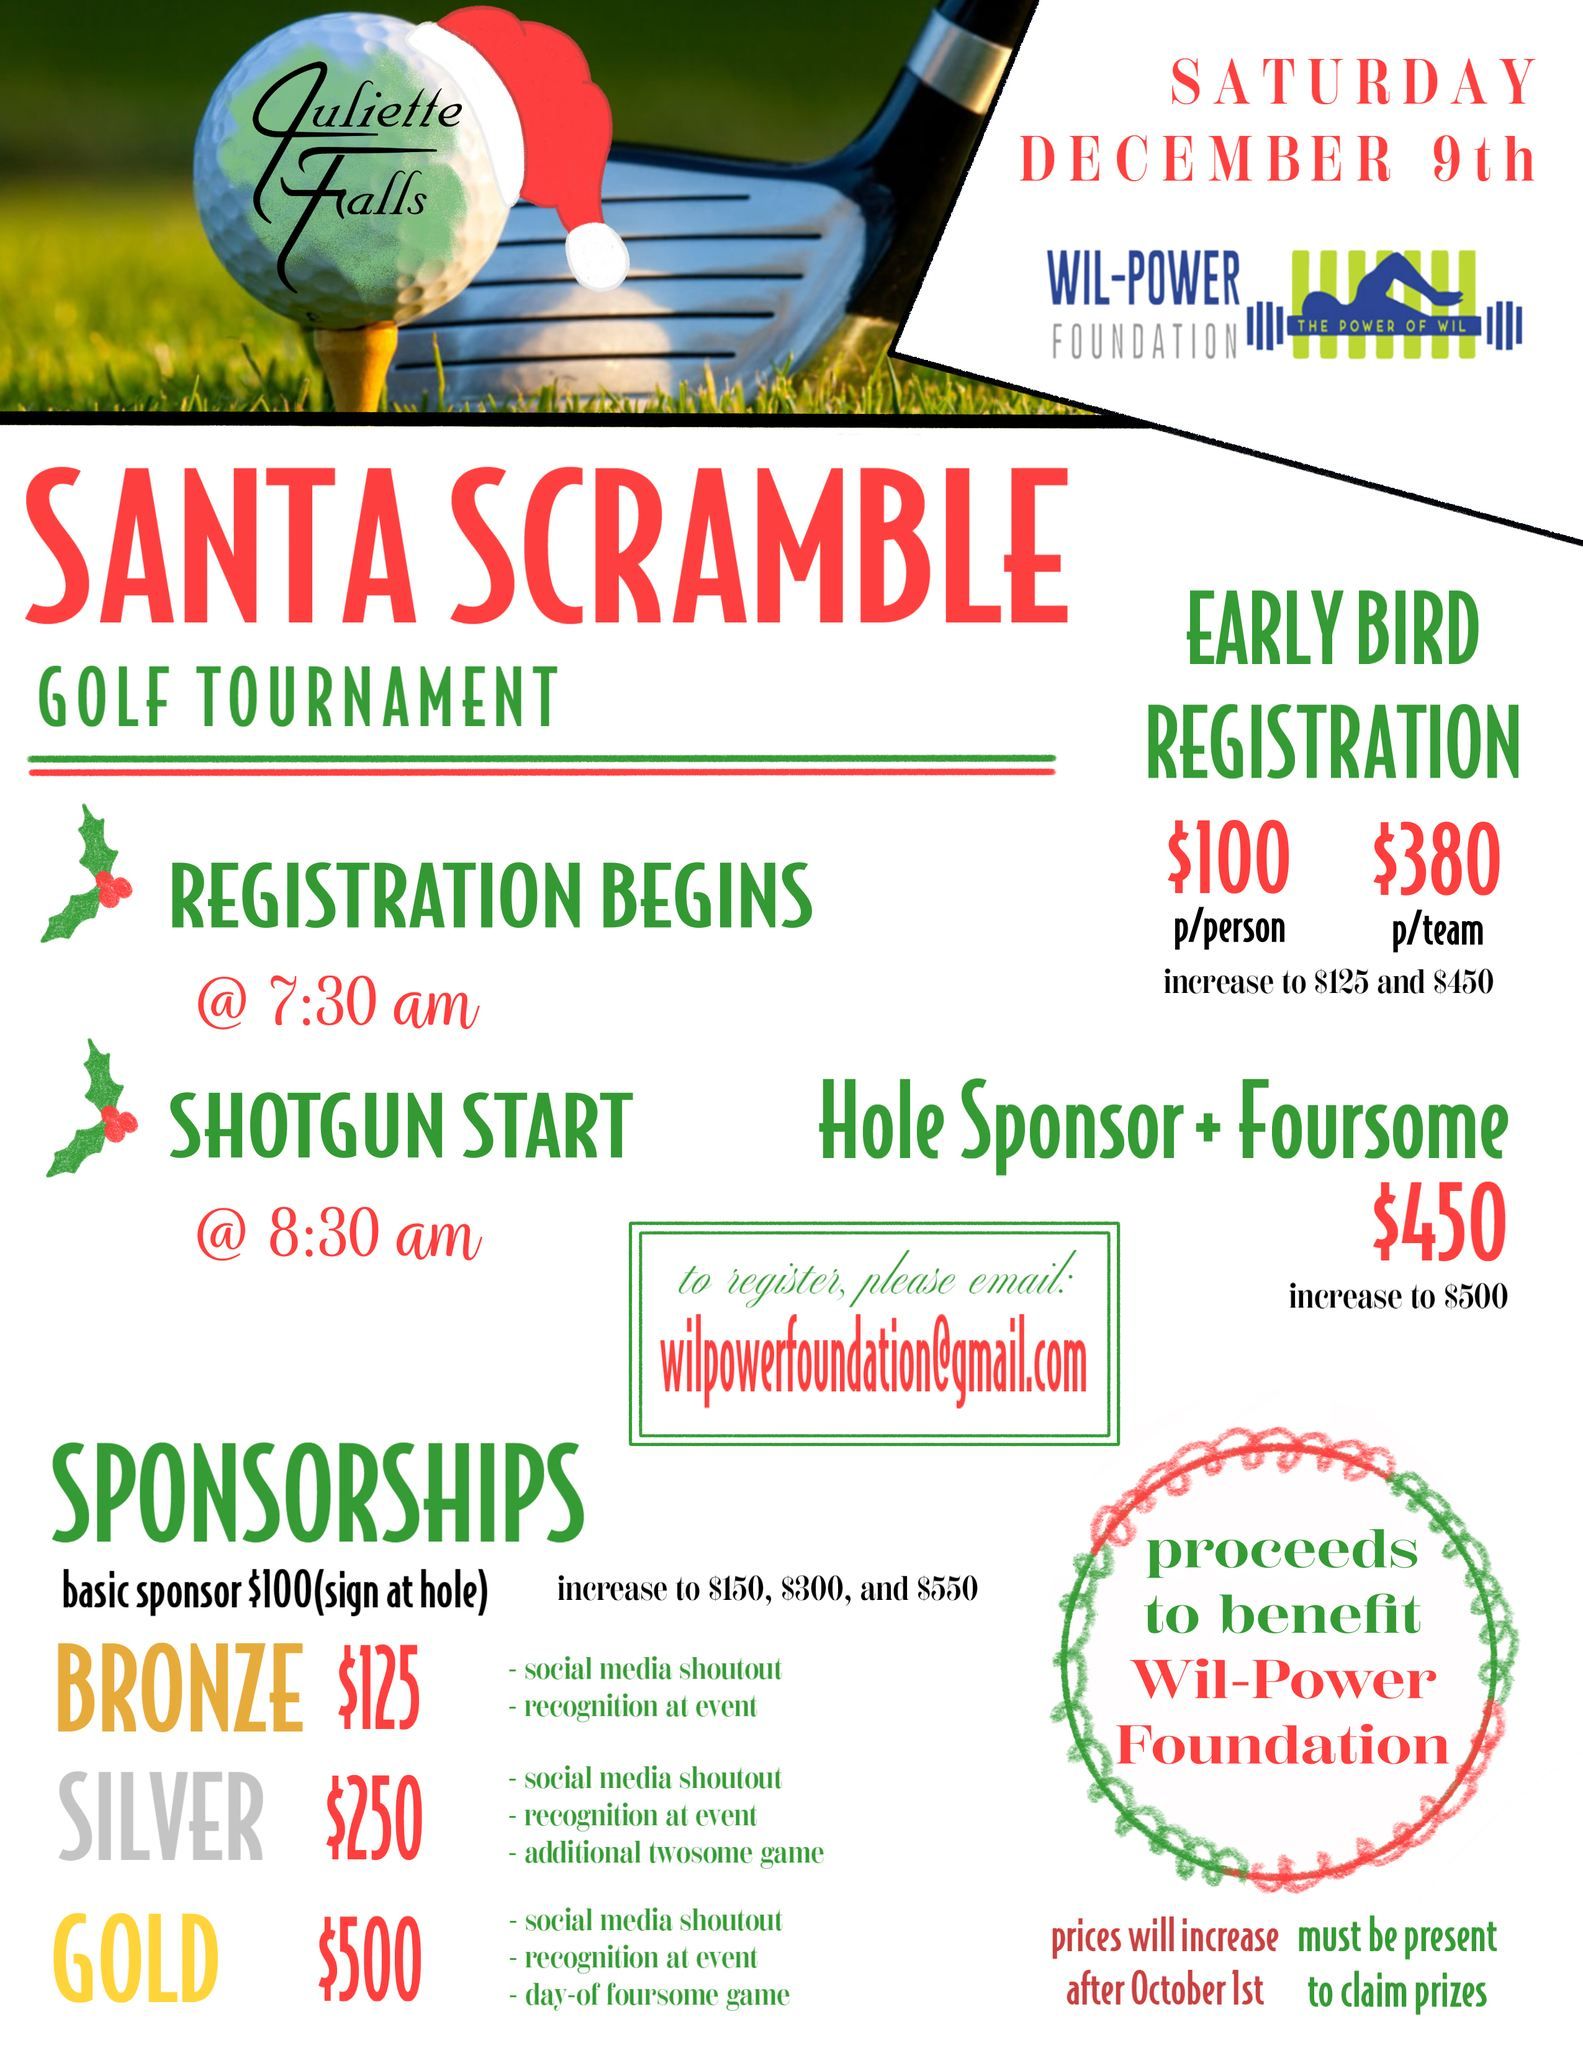 Santa Scramble Golf Tournament